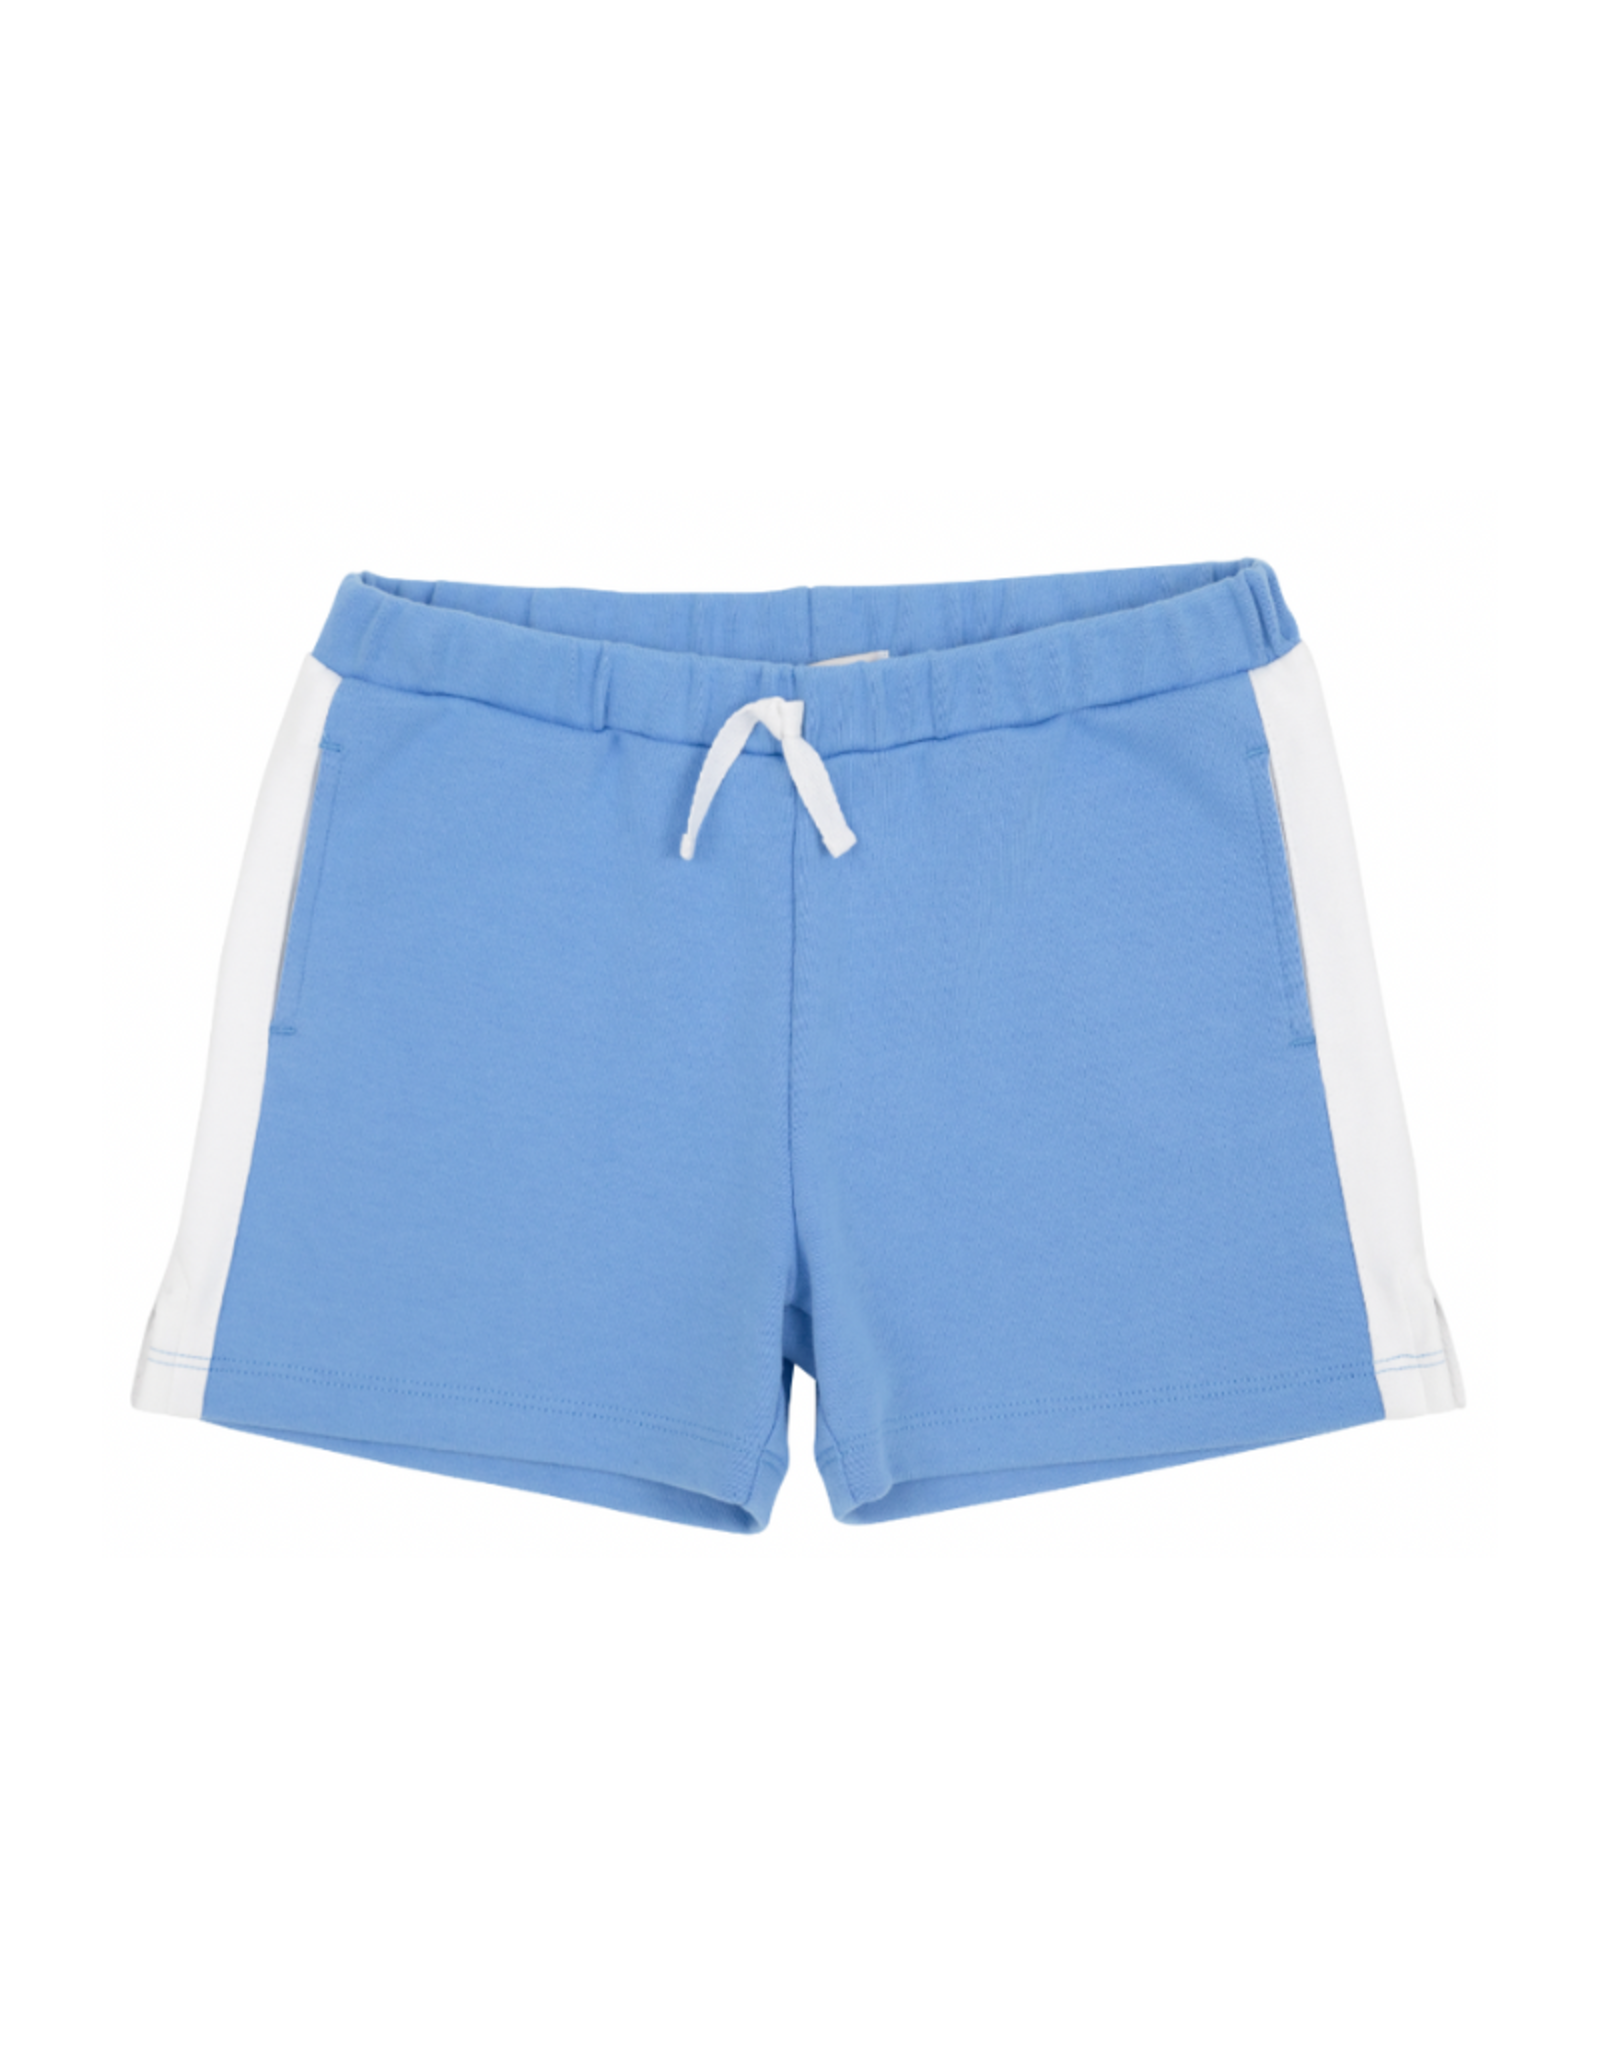 The Beaufort Bonnet Company Shaefer Shorts - Barbados Blue/White